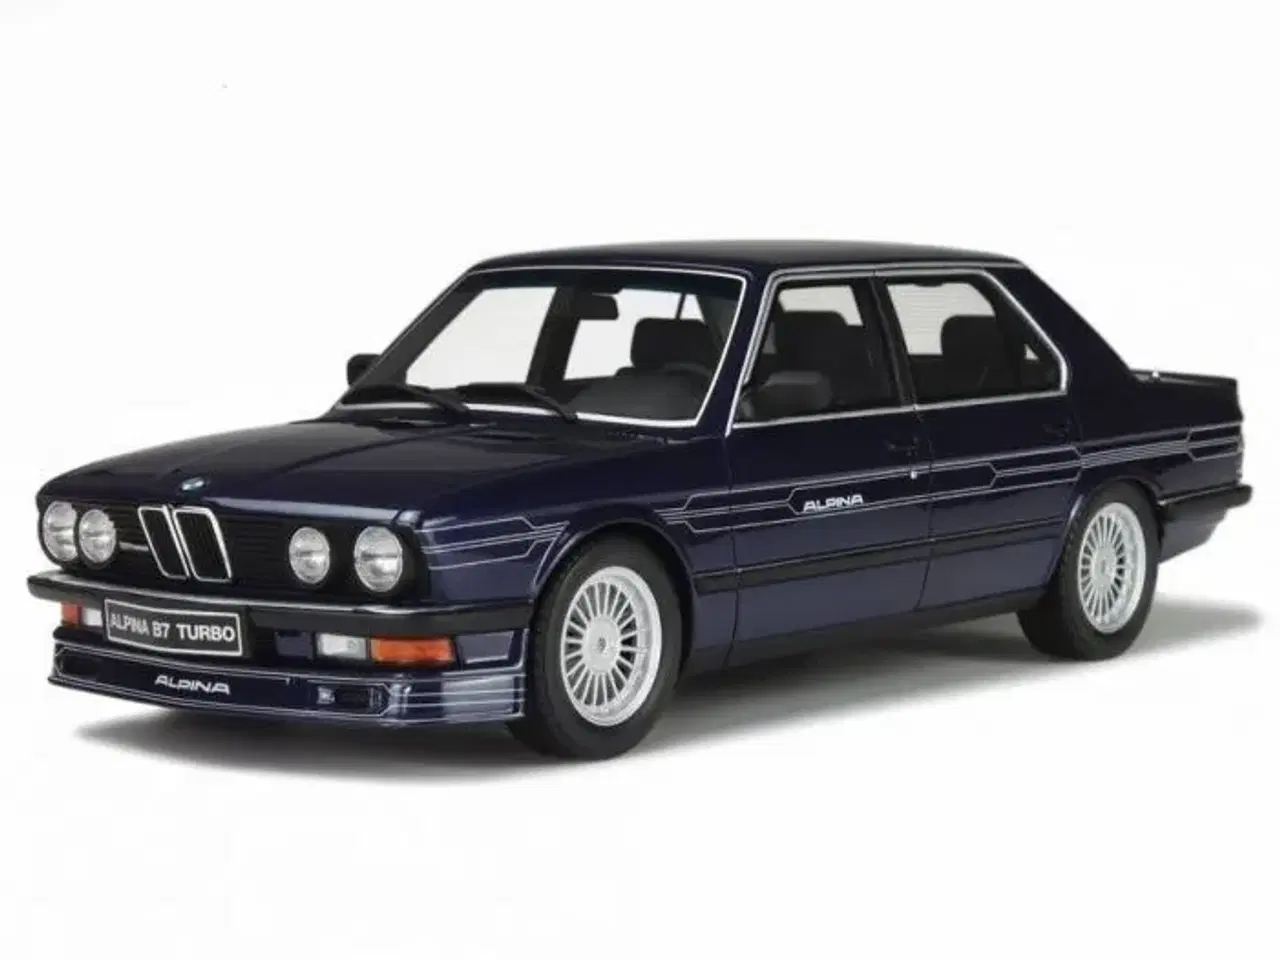 Billede 1 - 1984 BMW M5 E28 / Alpina B7 Turbo 1:18